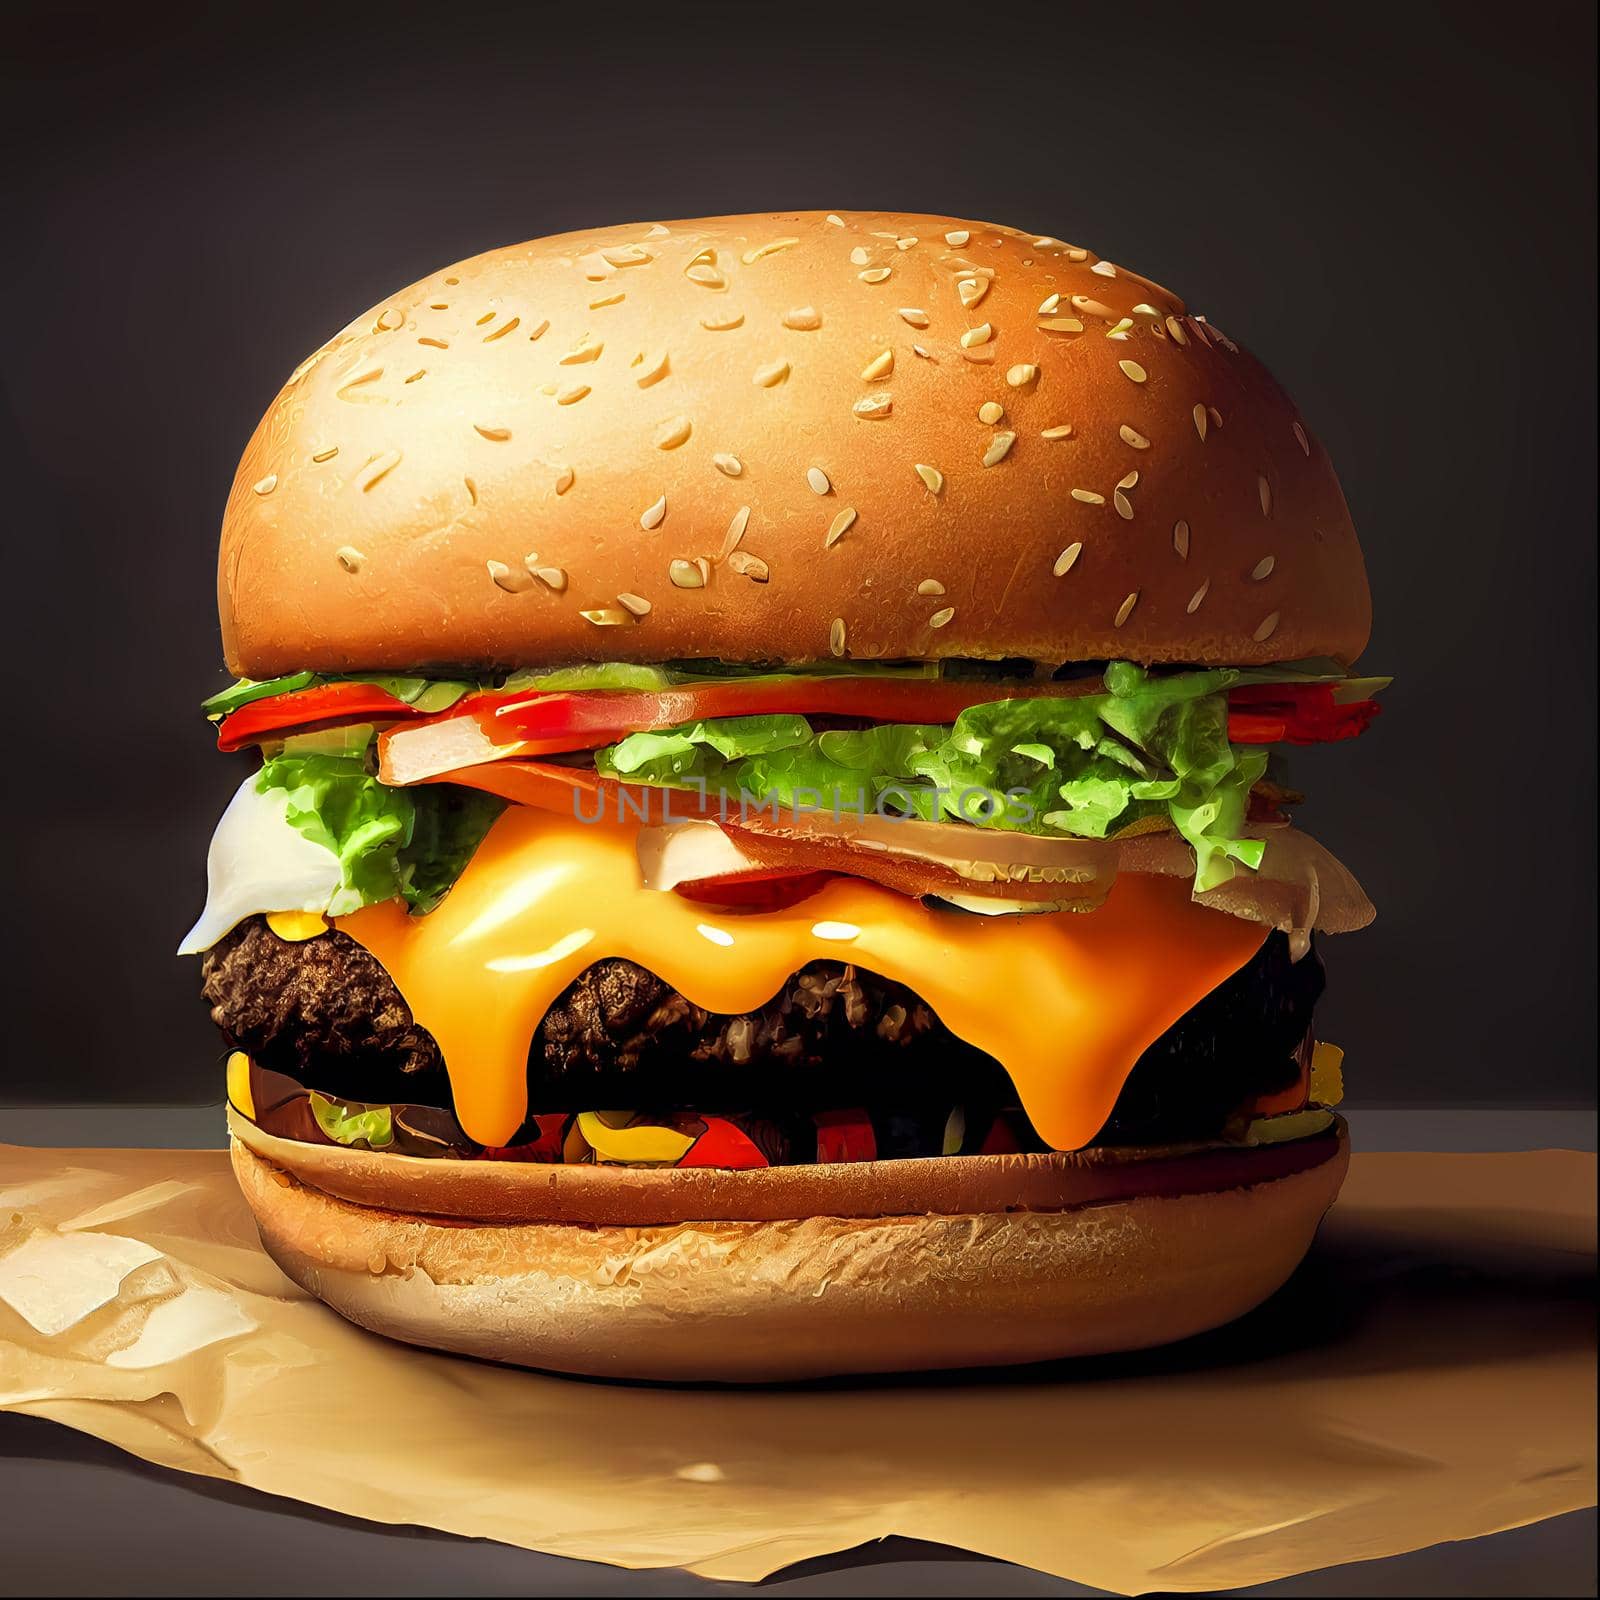 Fresh tasty cheeseburger on craft paper. Digital illustration by vmalafeevskiy